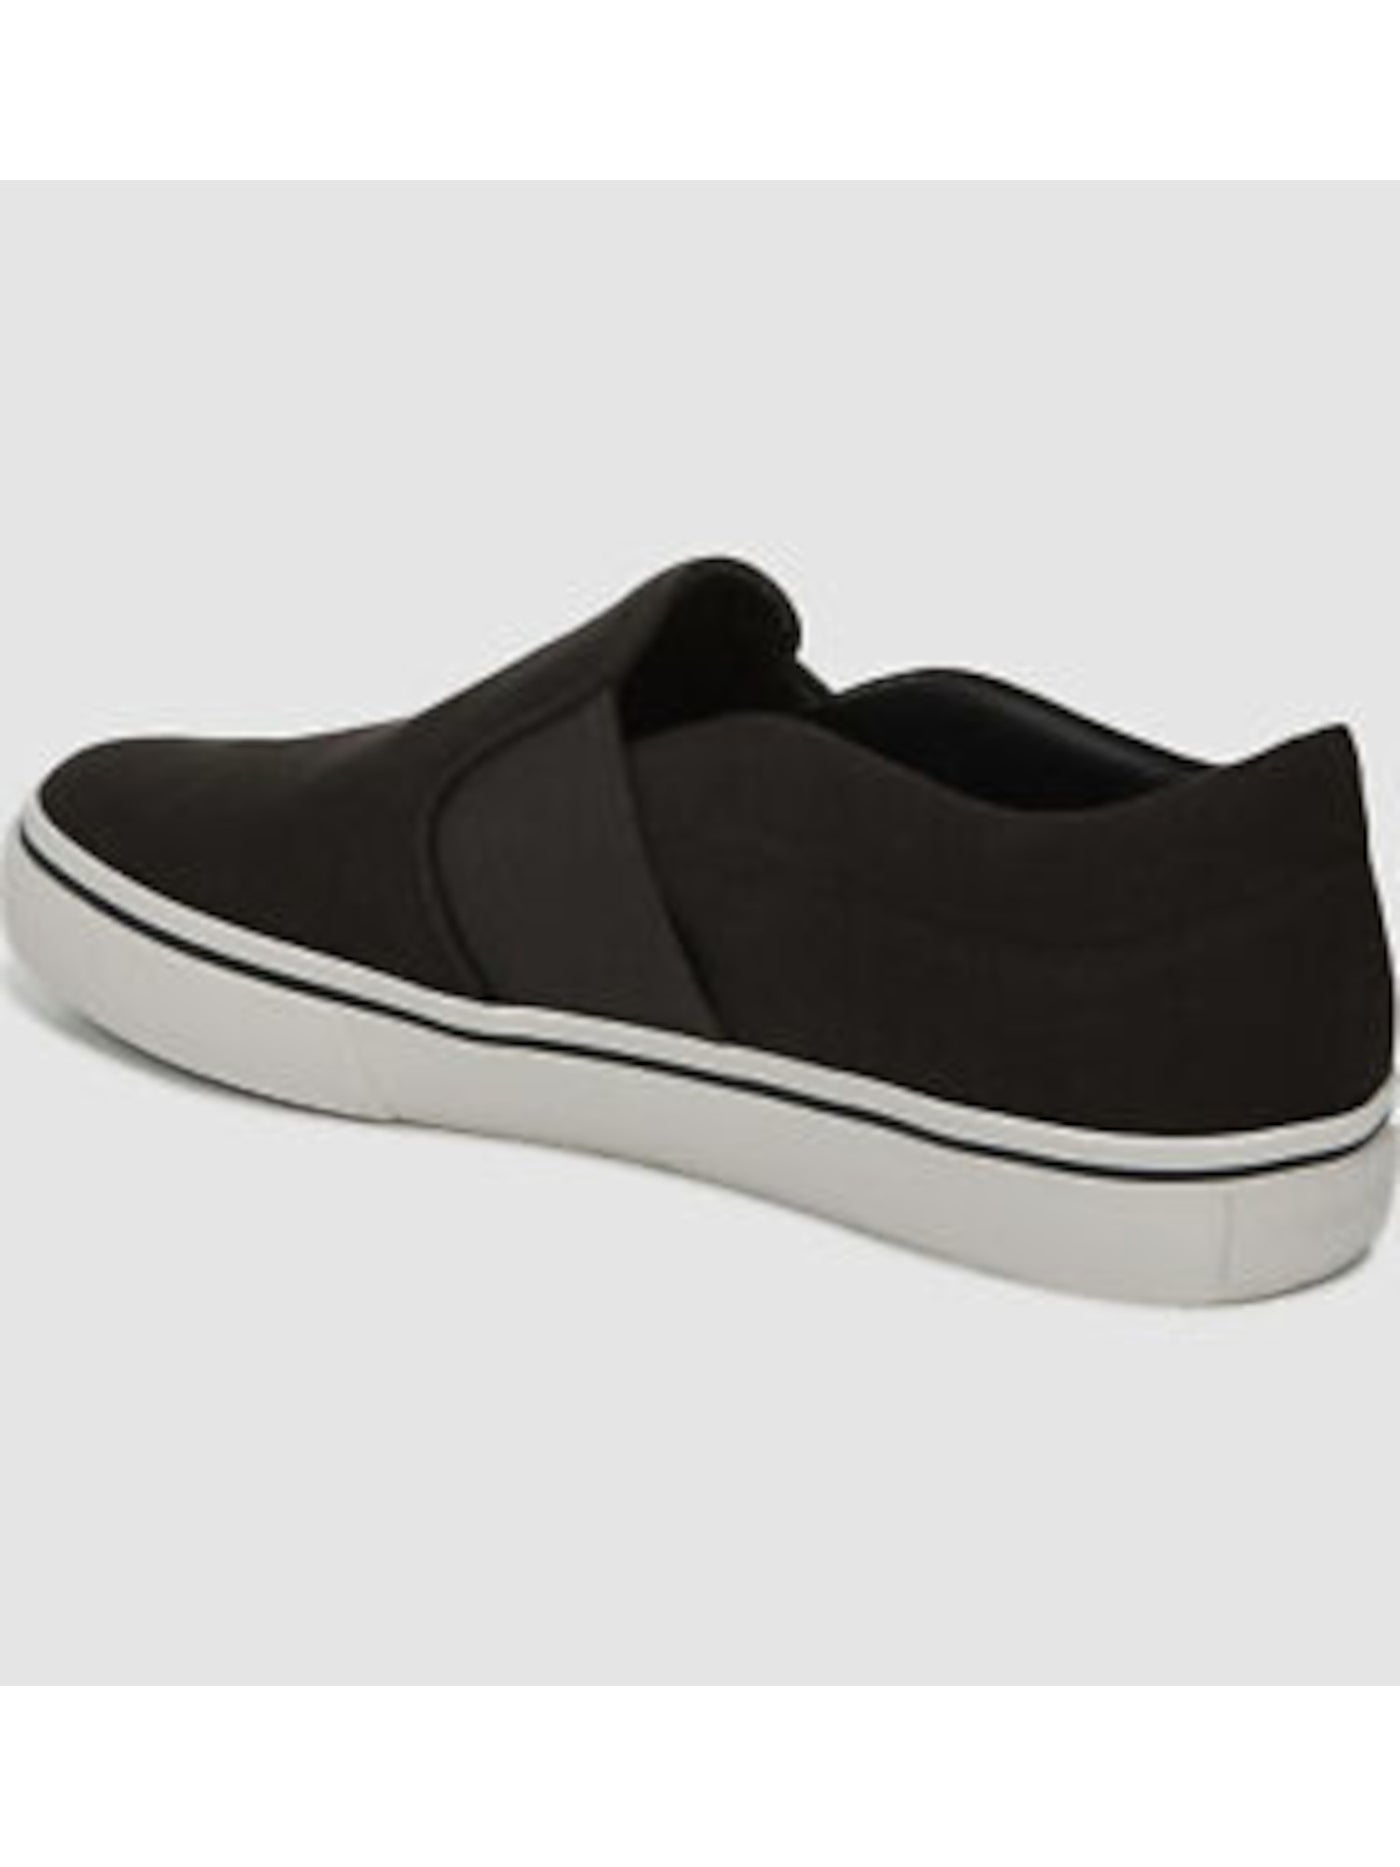 VINCE. Mens Black Goring Fenton Round Toe Platform Slip On Sneakers Shoes 11 M